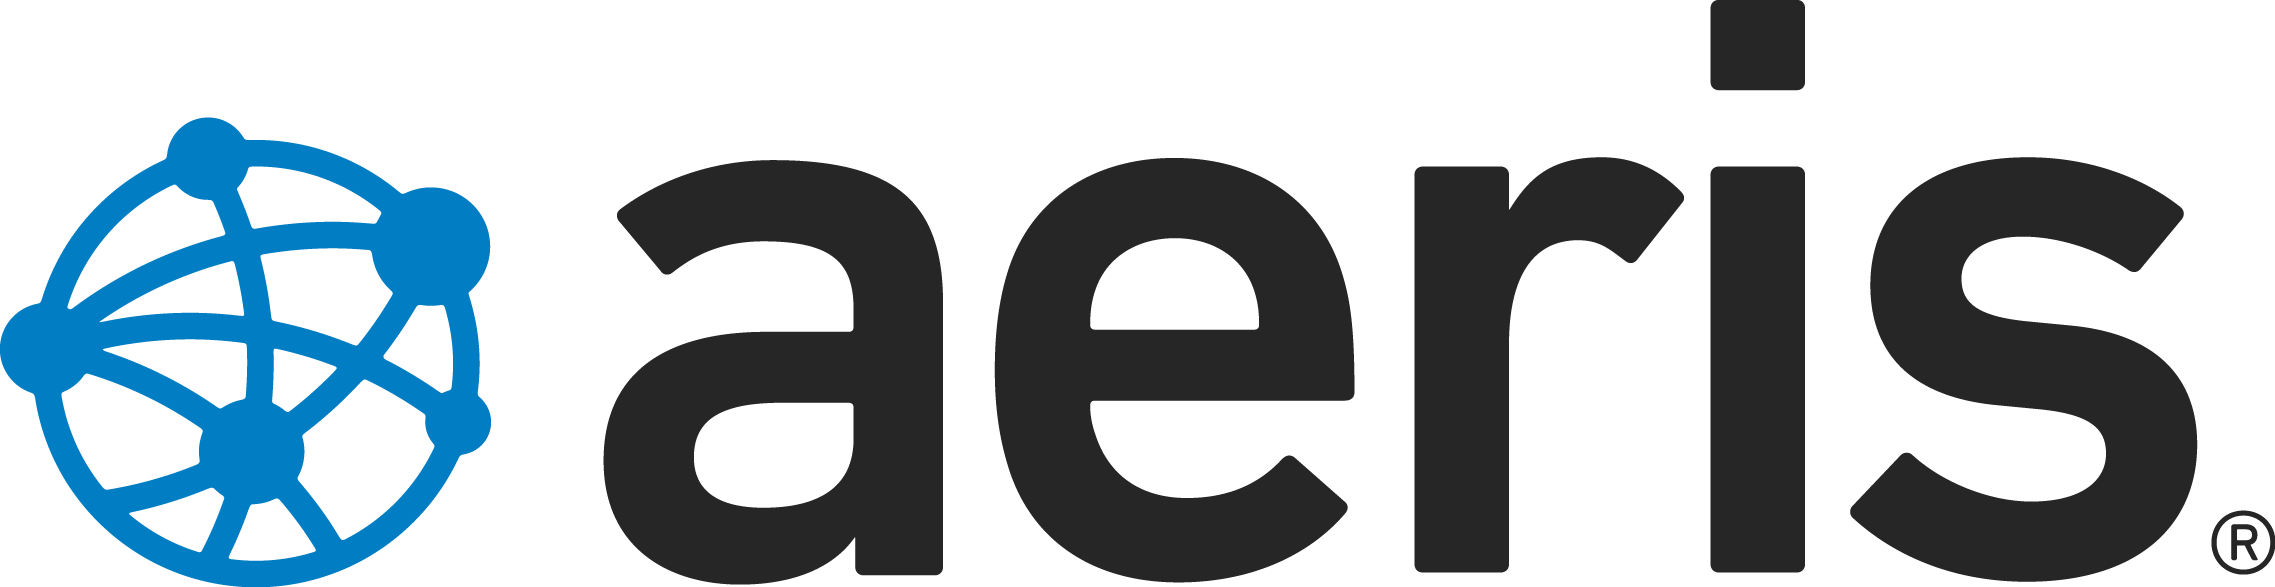 Aeris_logo